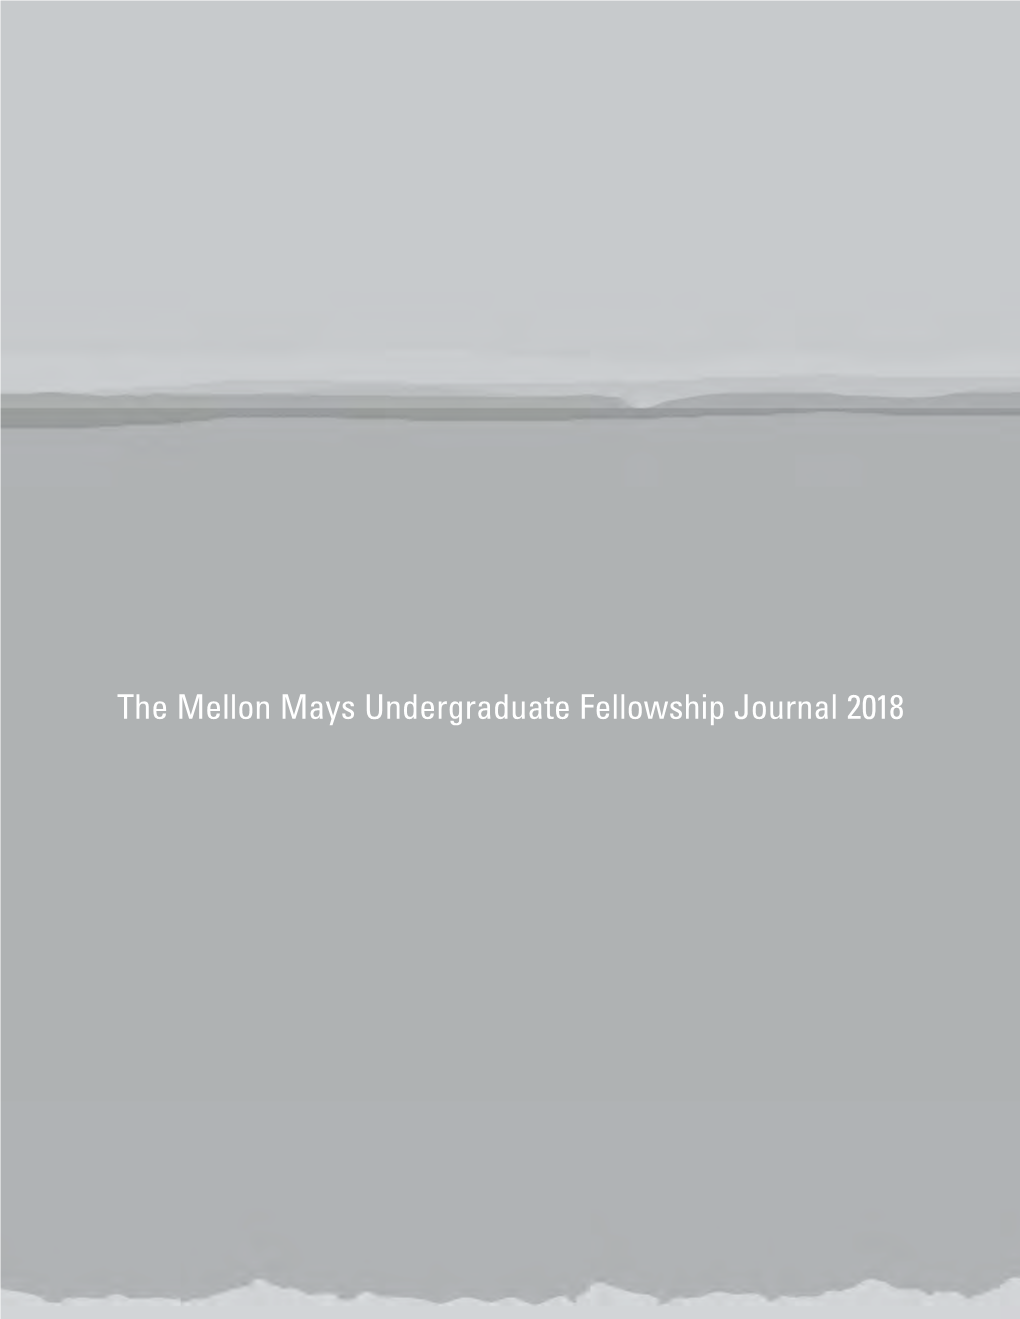 The Mellon Mays Undergraduate Fellowship Journal 2018